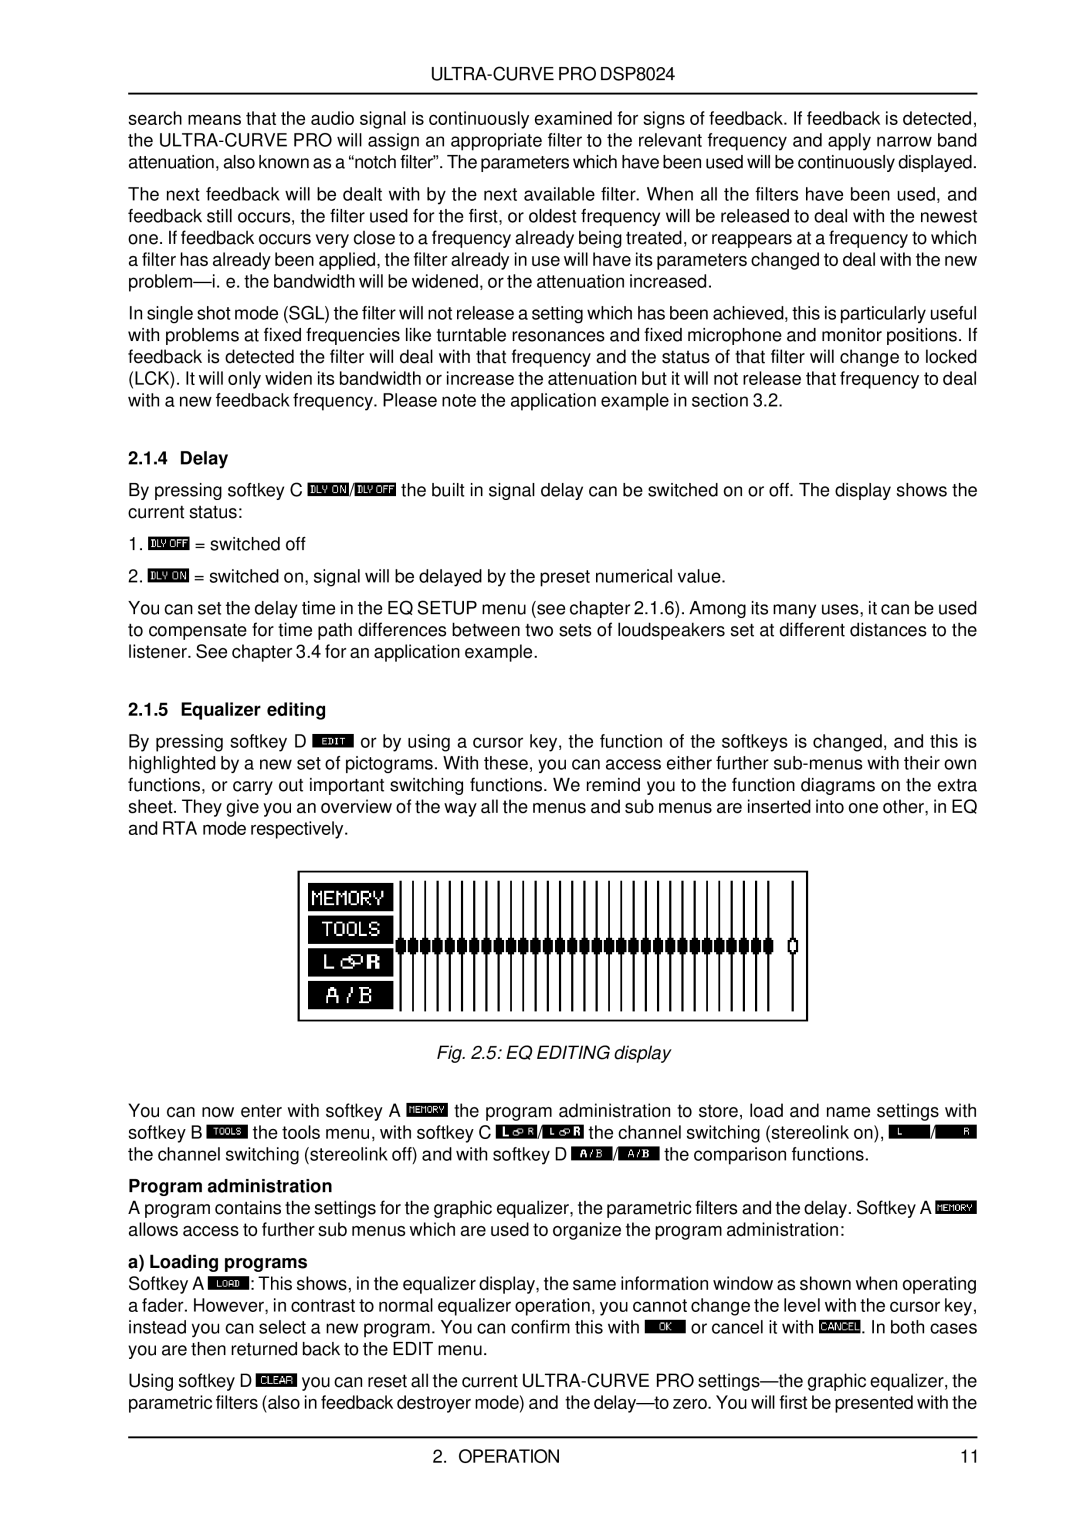 Behringer DSP8024 user manual Delay, Equalizer editing, Program administration, a Loading programs 